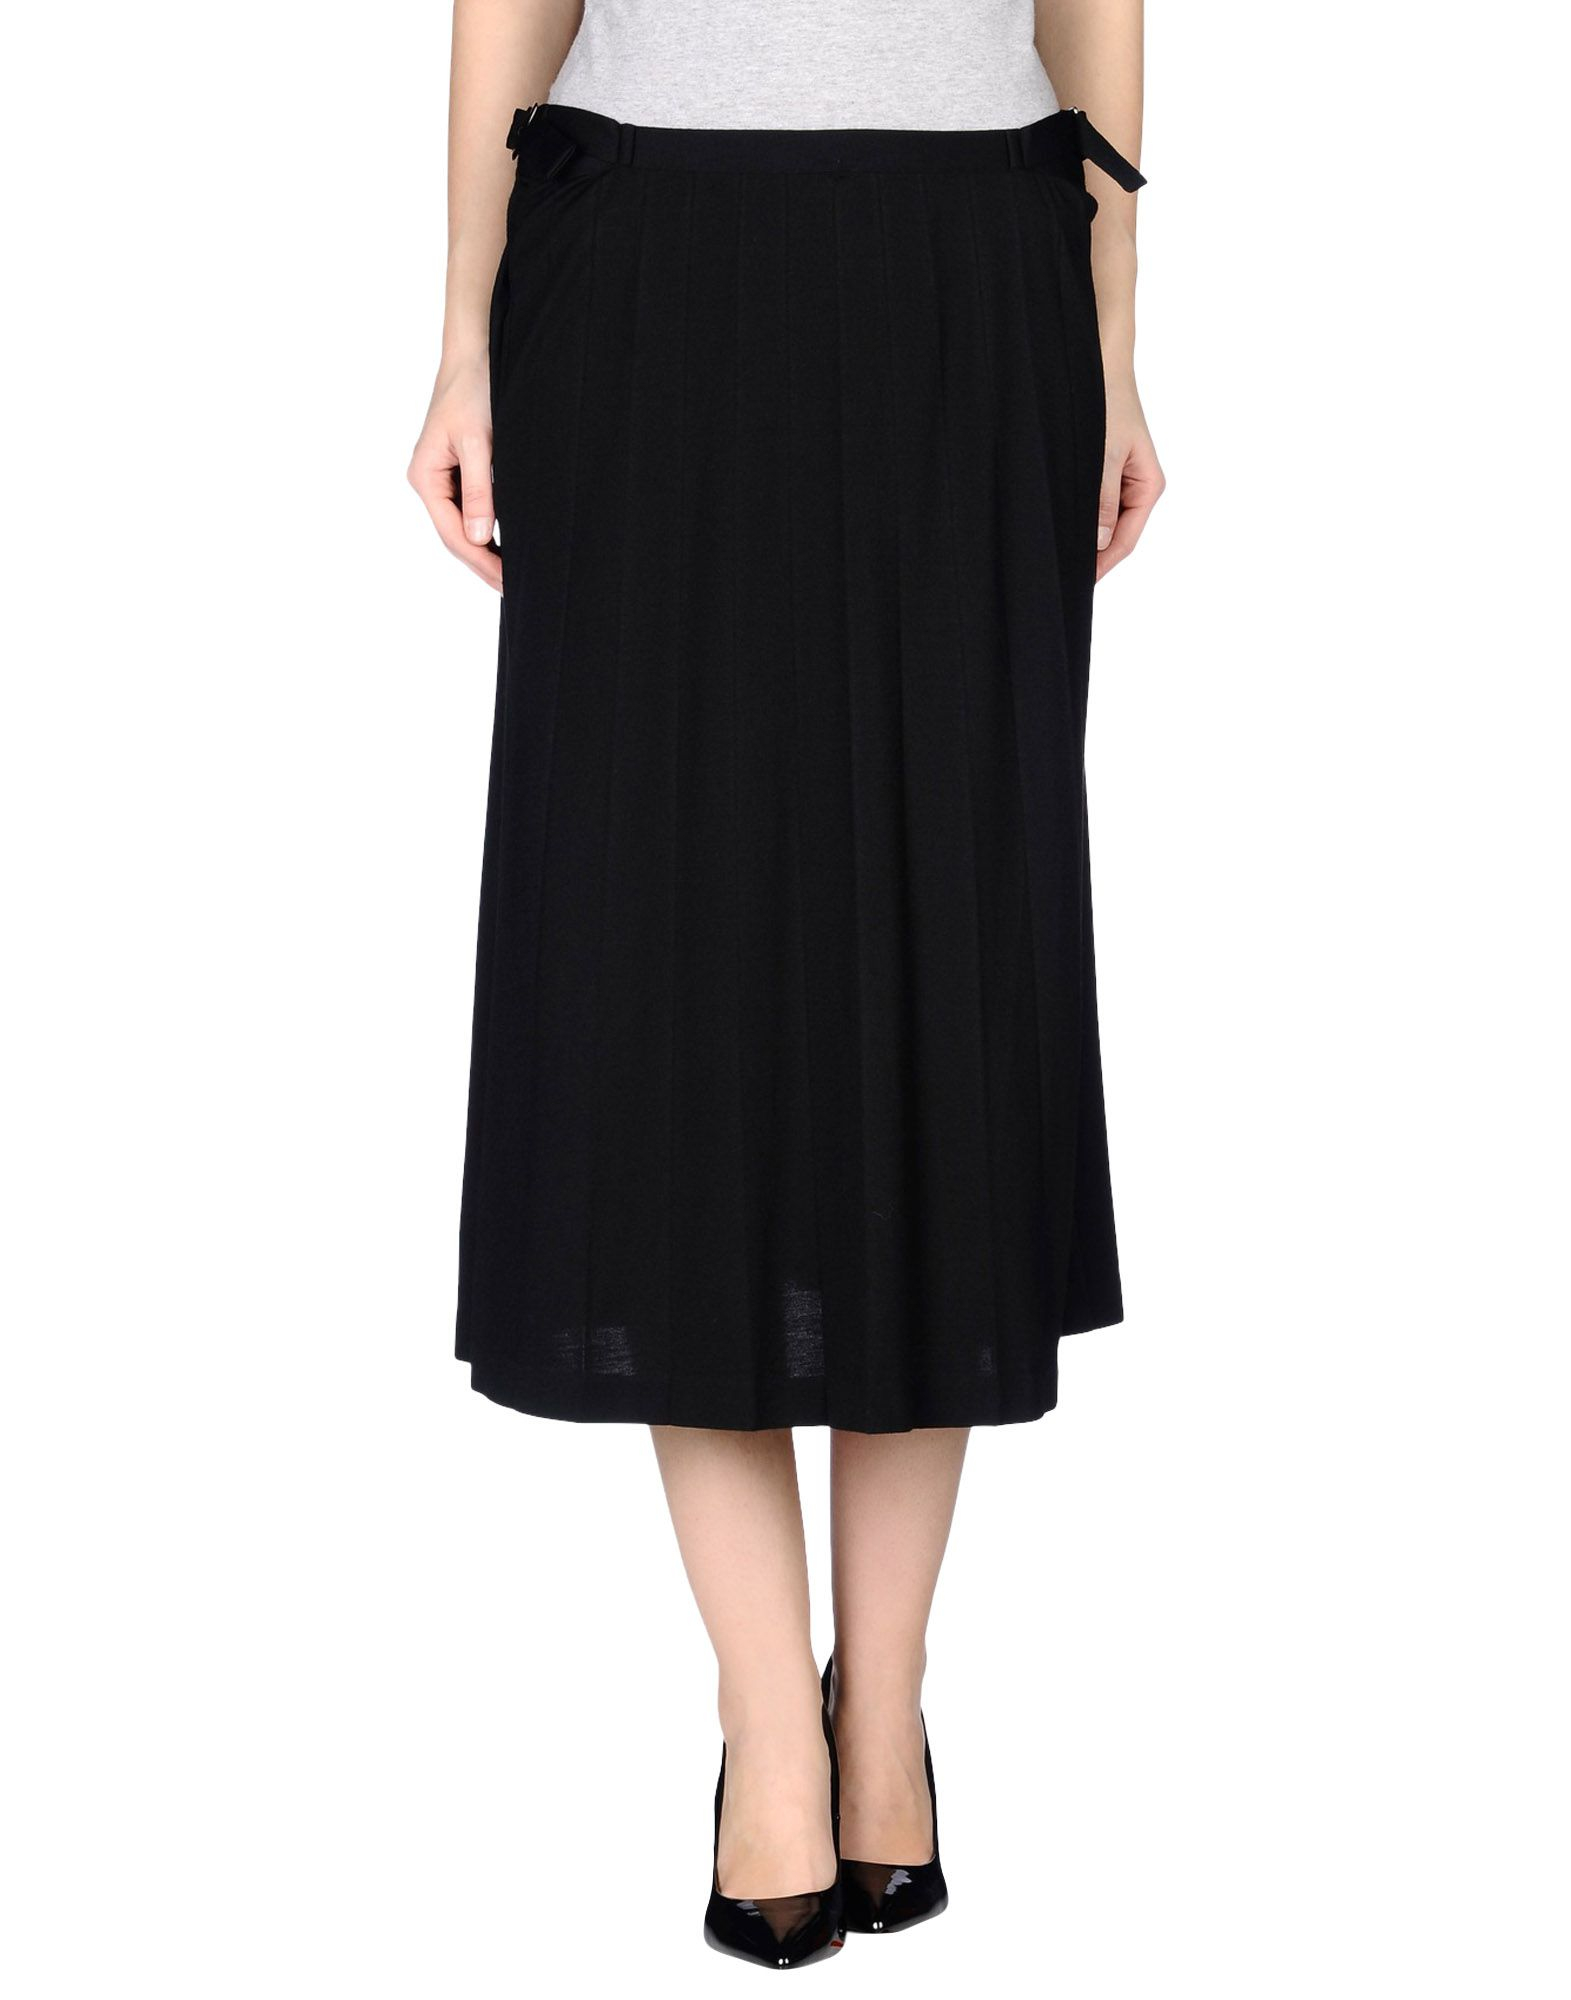 Yohji yamamoto 3/4 Length Skirt in Black | Lyst